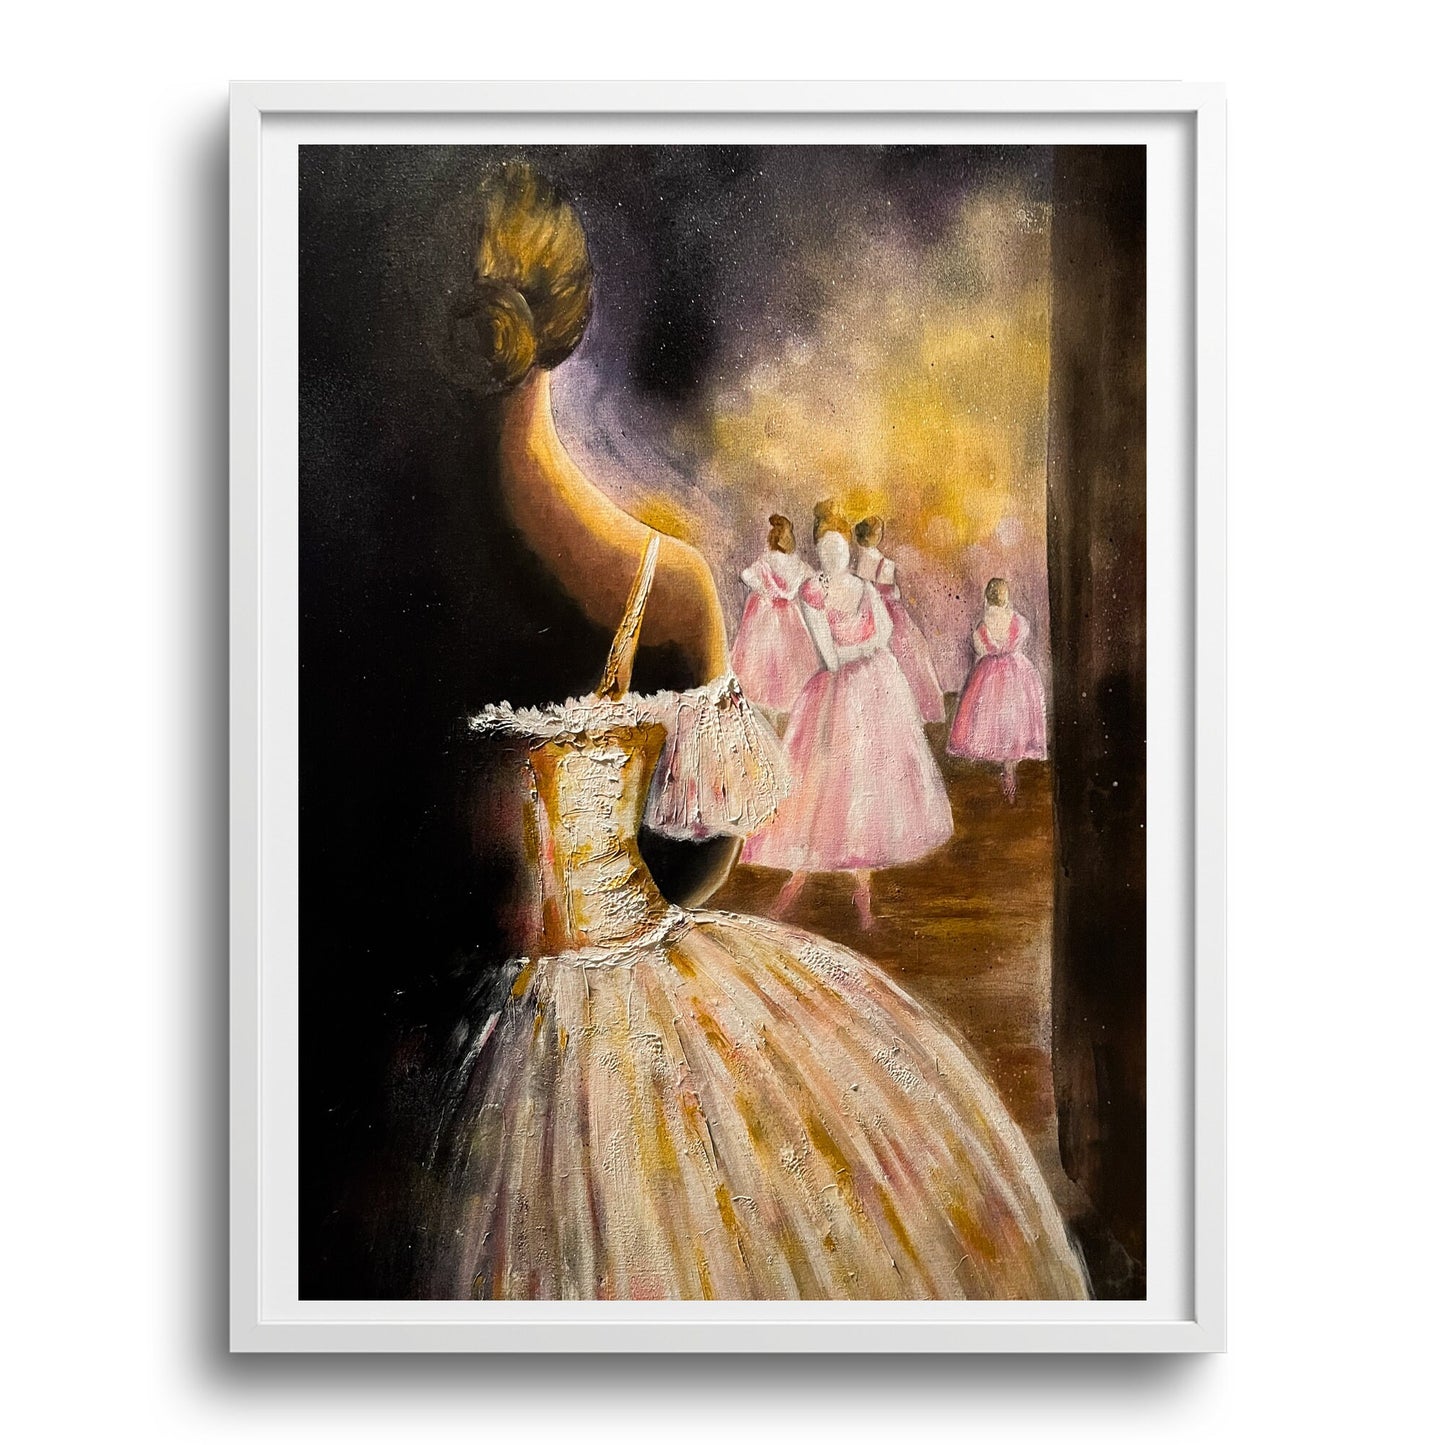 Art Print "Awaiting Grace" Acrylic and Oil Painting | Ballerina Art